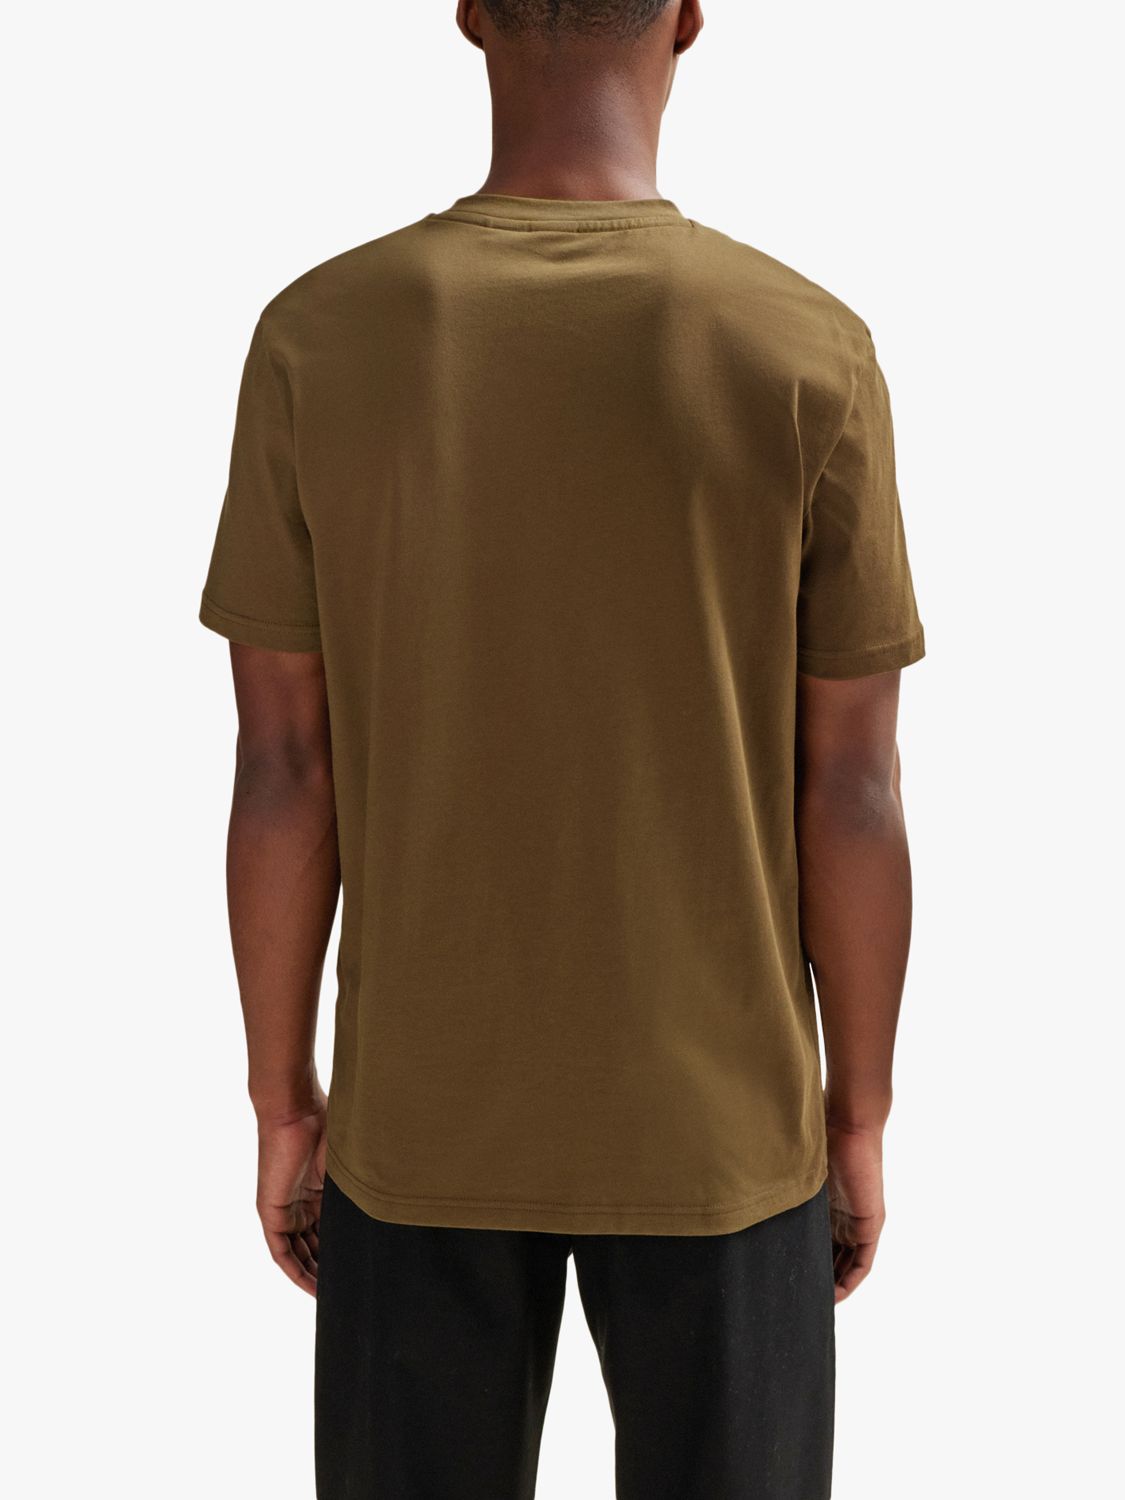 BOSS Thinking 368 T-Shirt, Green, L